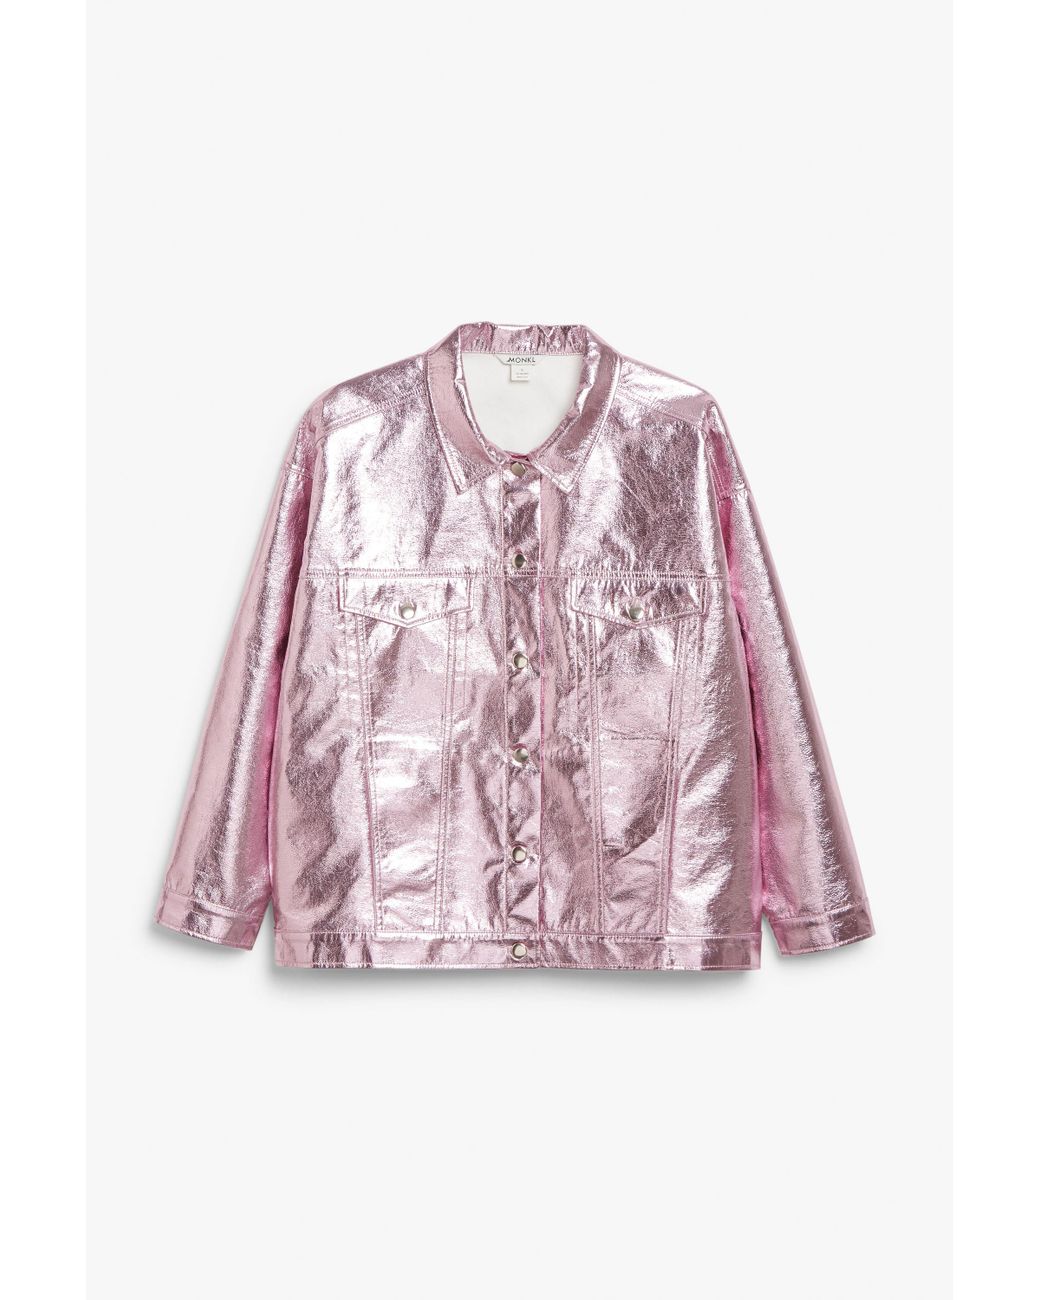 Monki Synthetic Metallic Jacket in Pink Metallic (Pink) | Lyst Canada